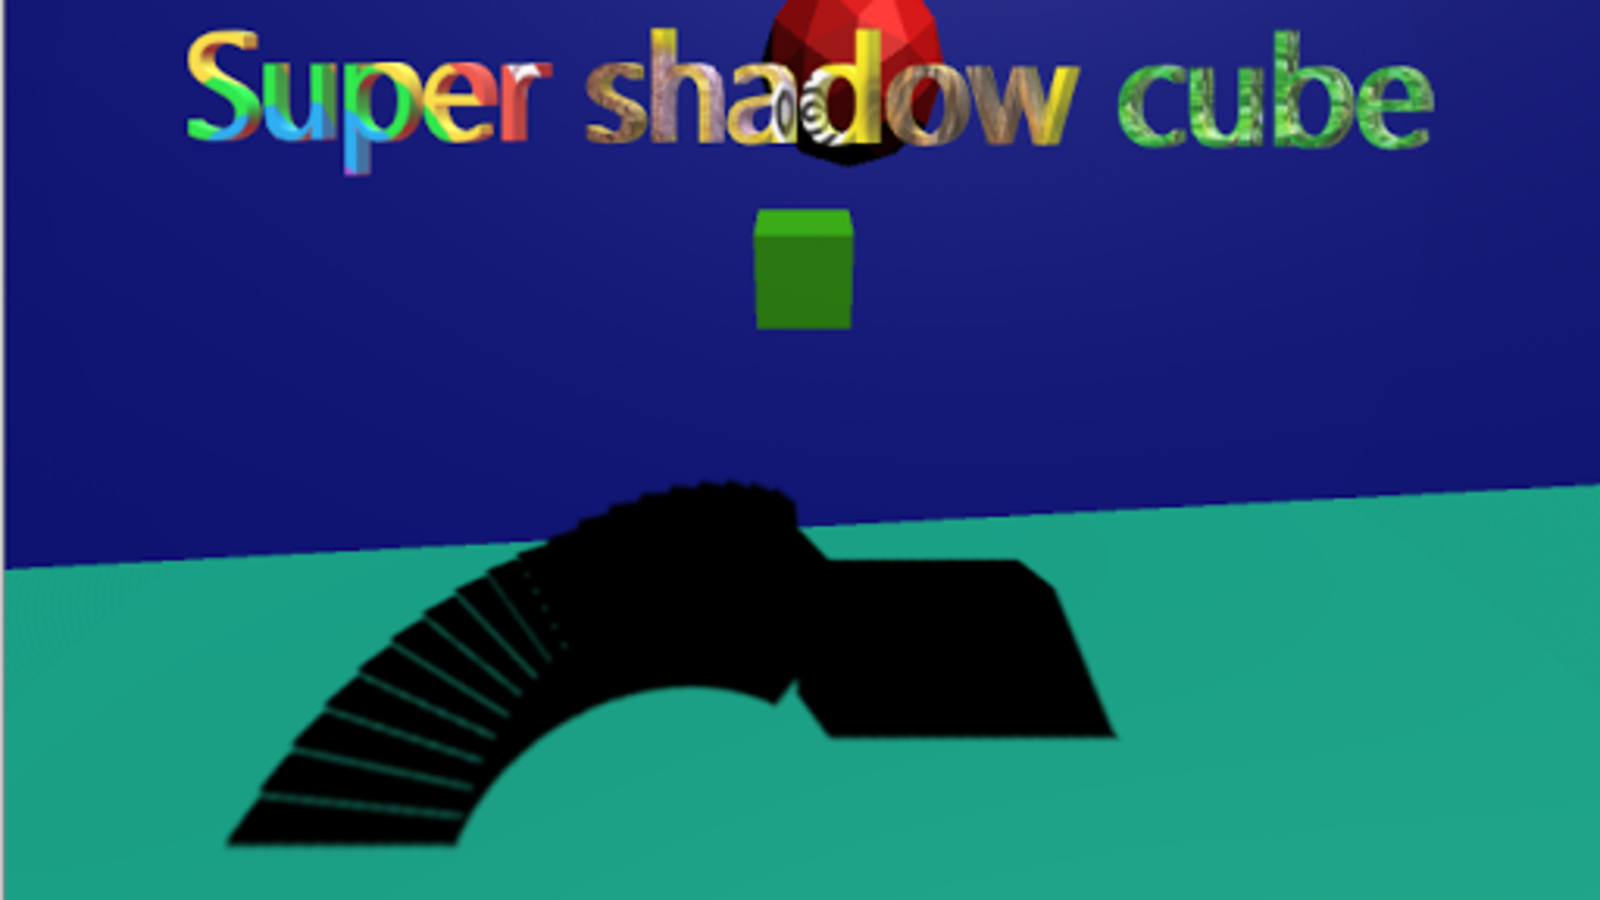 Super shadow cube